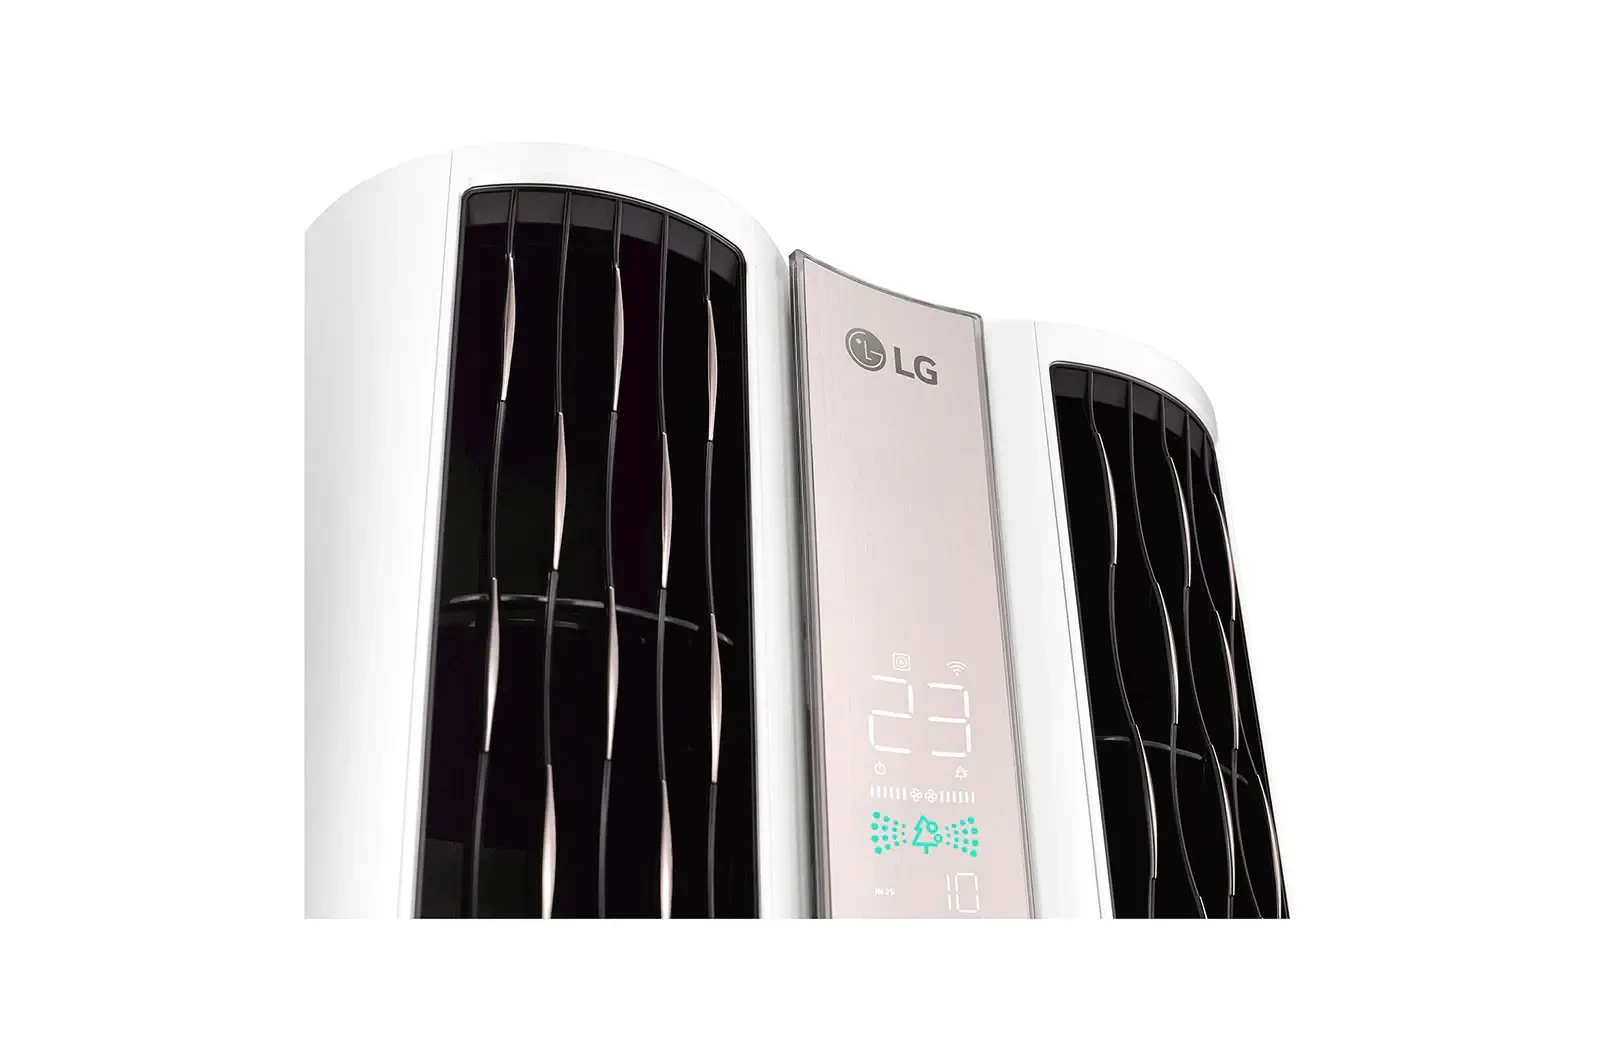 LG DUALCOOL Premium White AC, 2.5HP, SmartThinQ, Smart Diagnosis, Dual Inverter Compressor